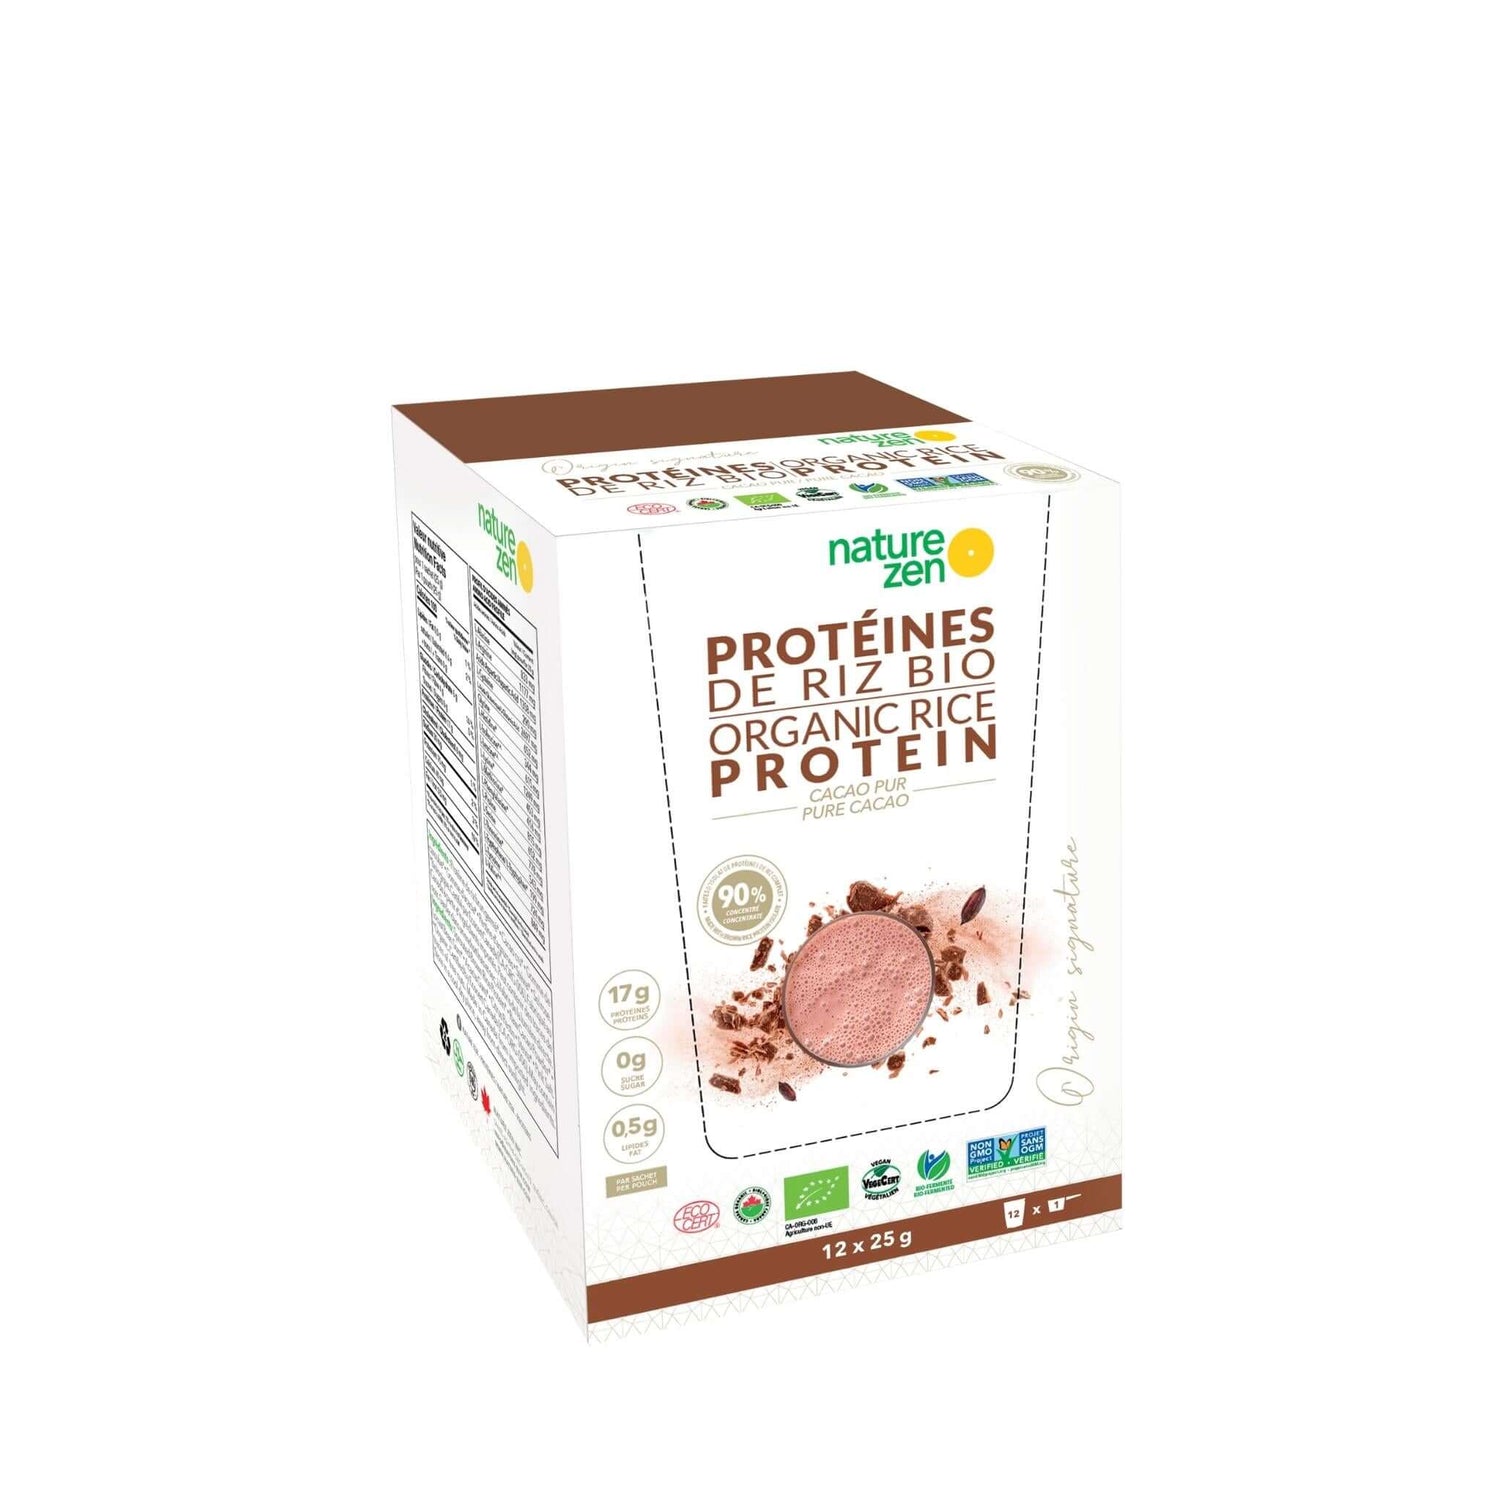 Nature Zen Origin - Organic Rice Protein Powder - Cacao (box)